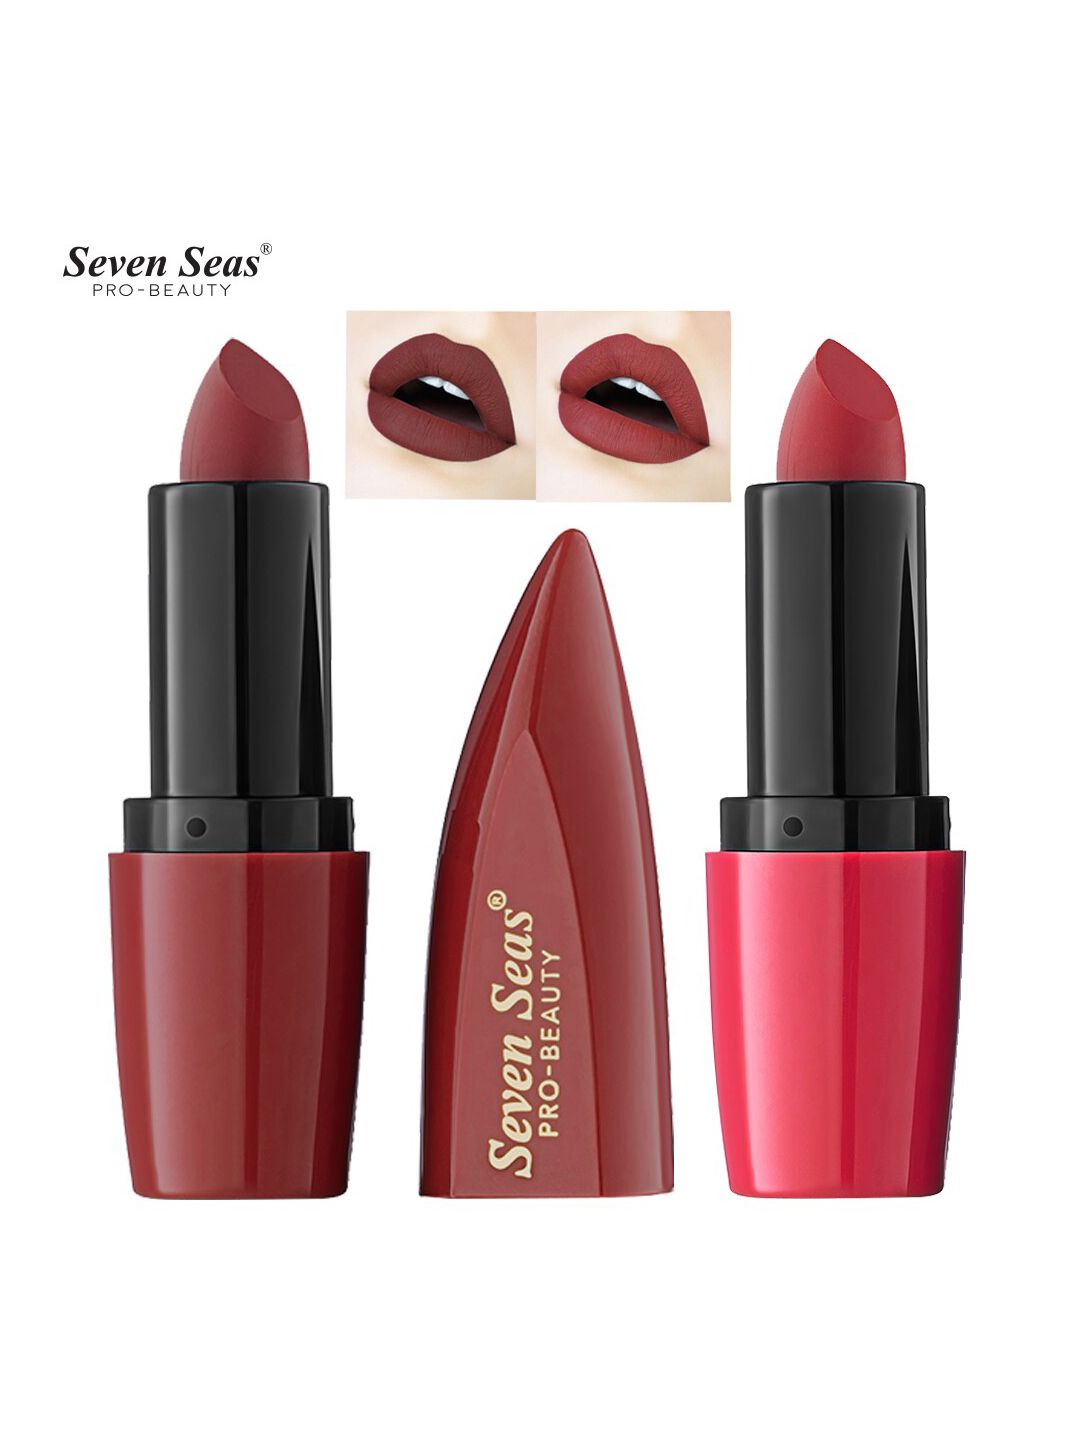 Seven Seas Set of 2 Ultimate Matte Full Coverage Lipstick - Chestnut Rose 2 305 & Rose 306 Price in India